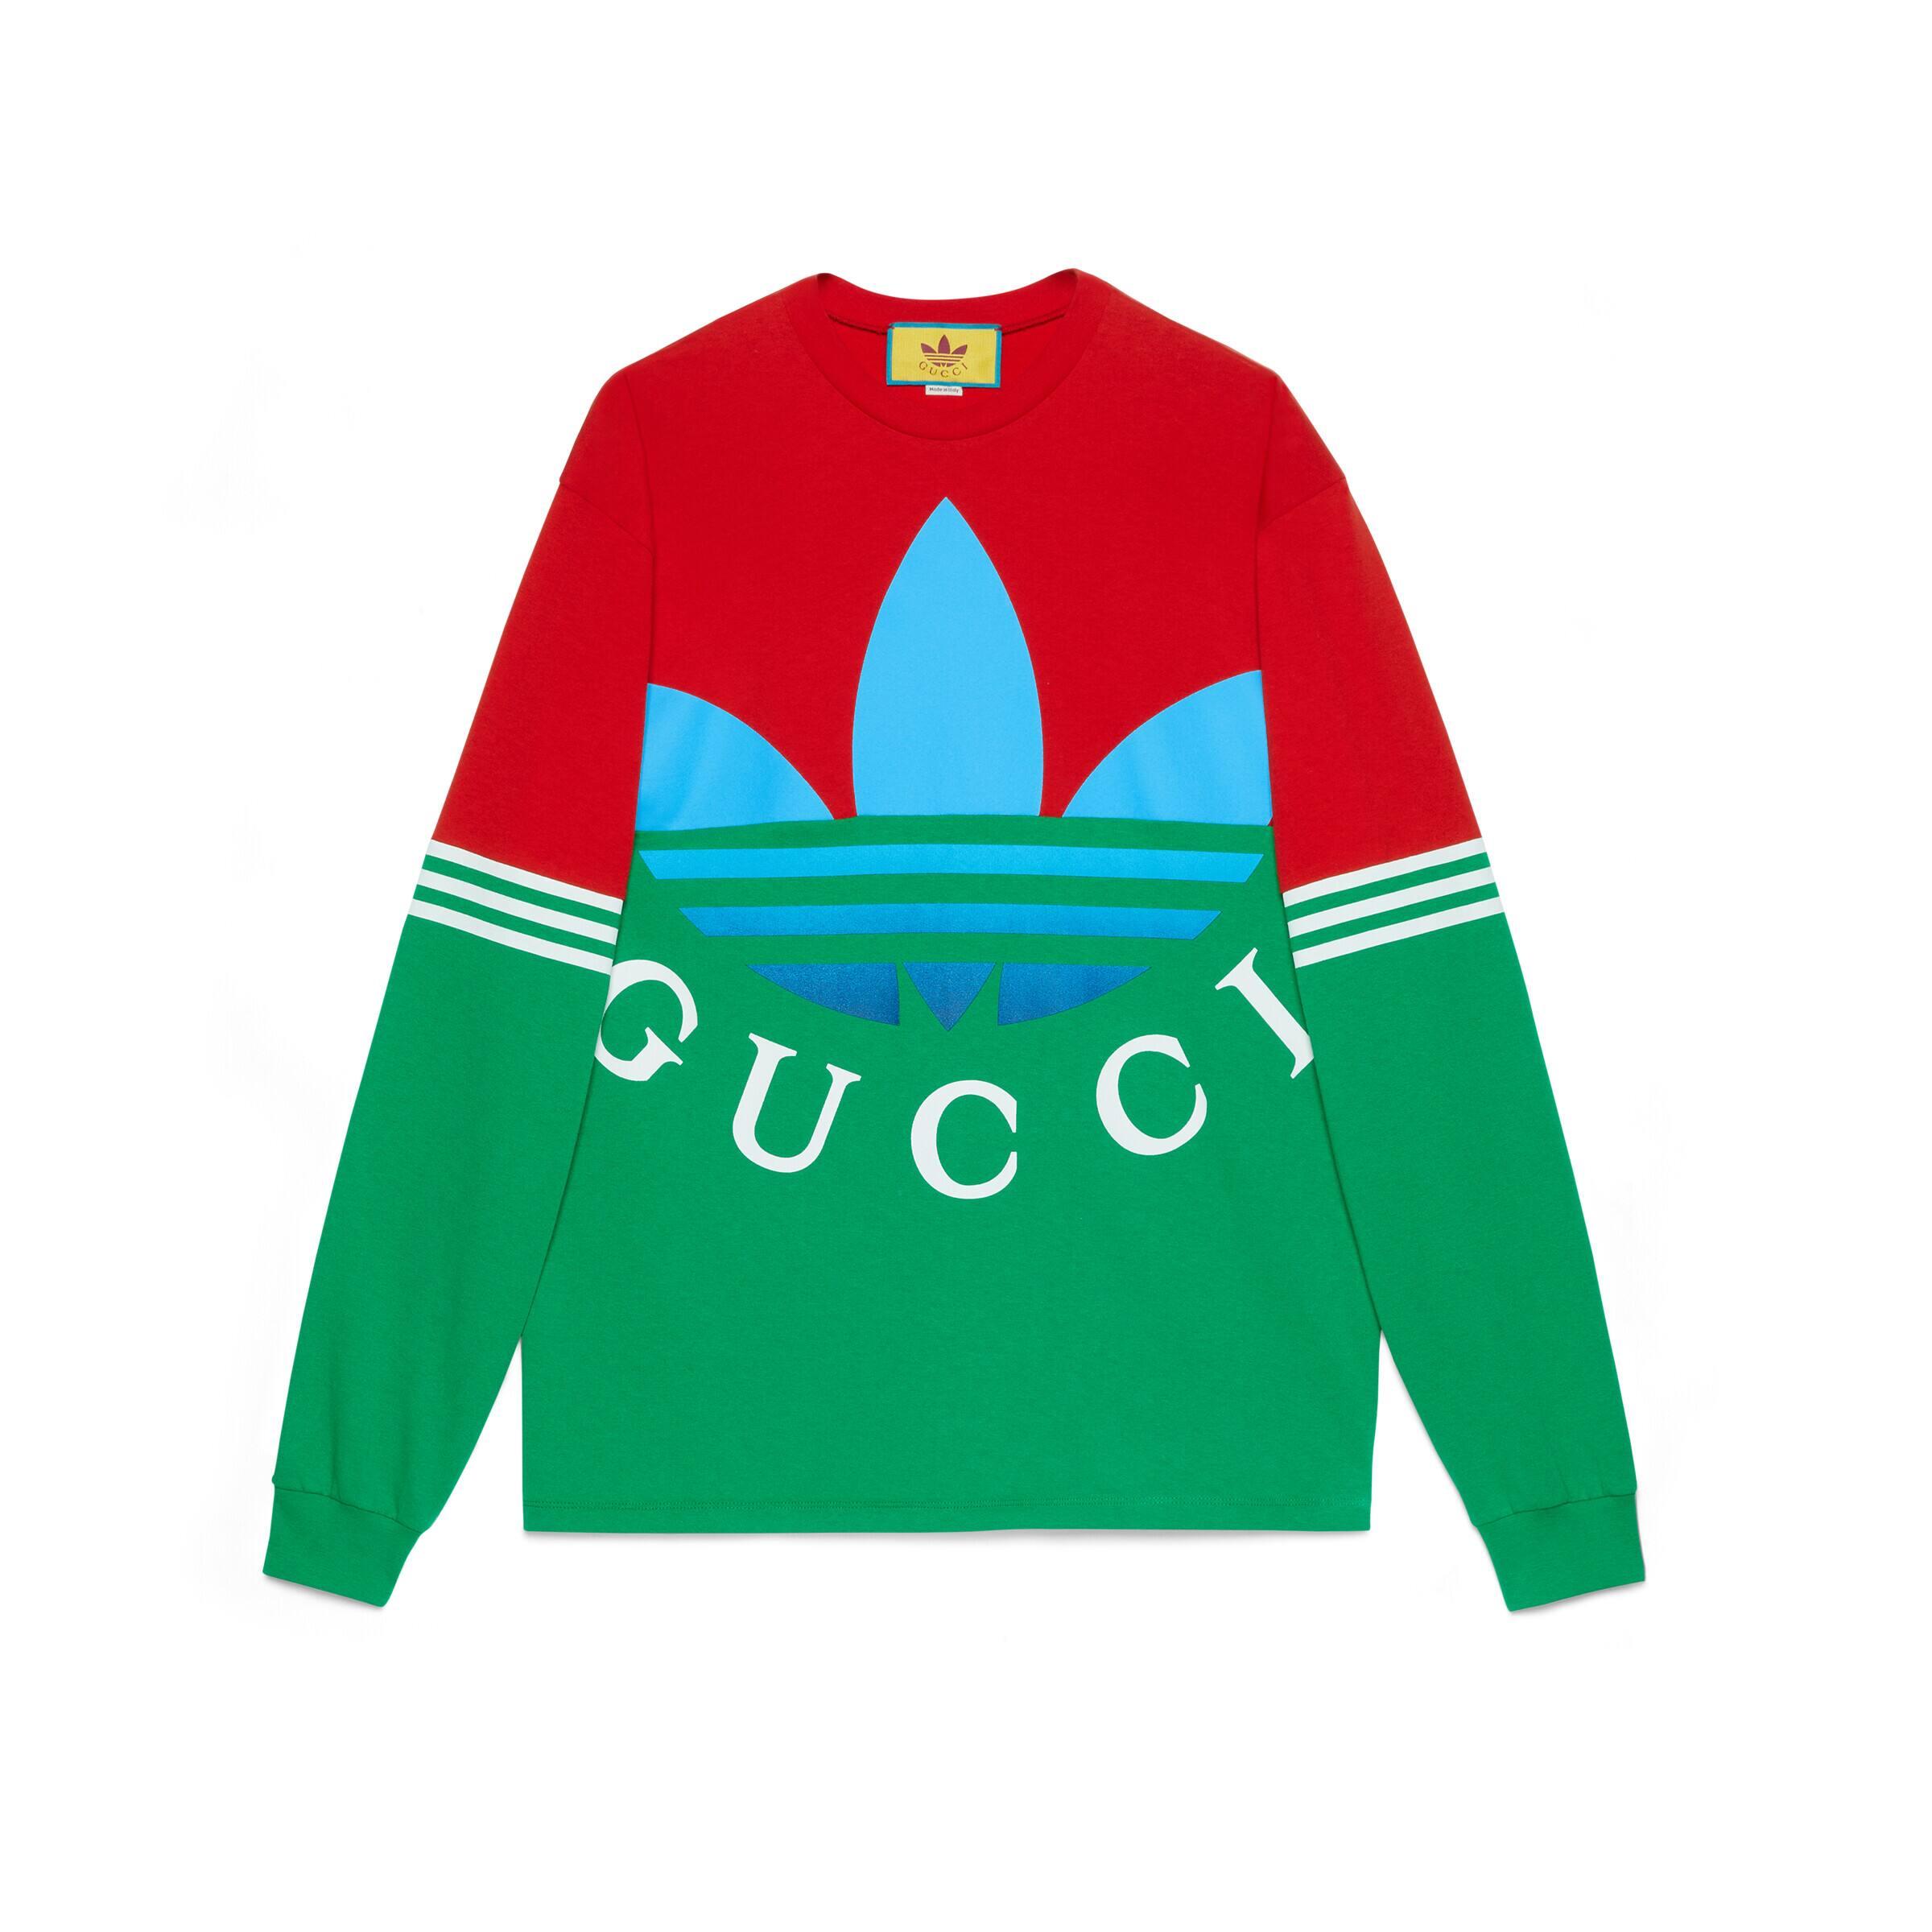 Gucci x Adidas Cotton T-Shirt Black/Multicolor